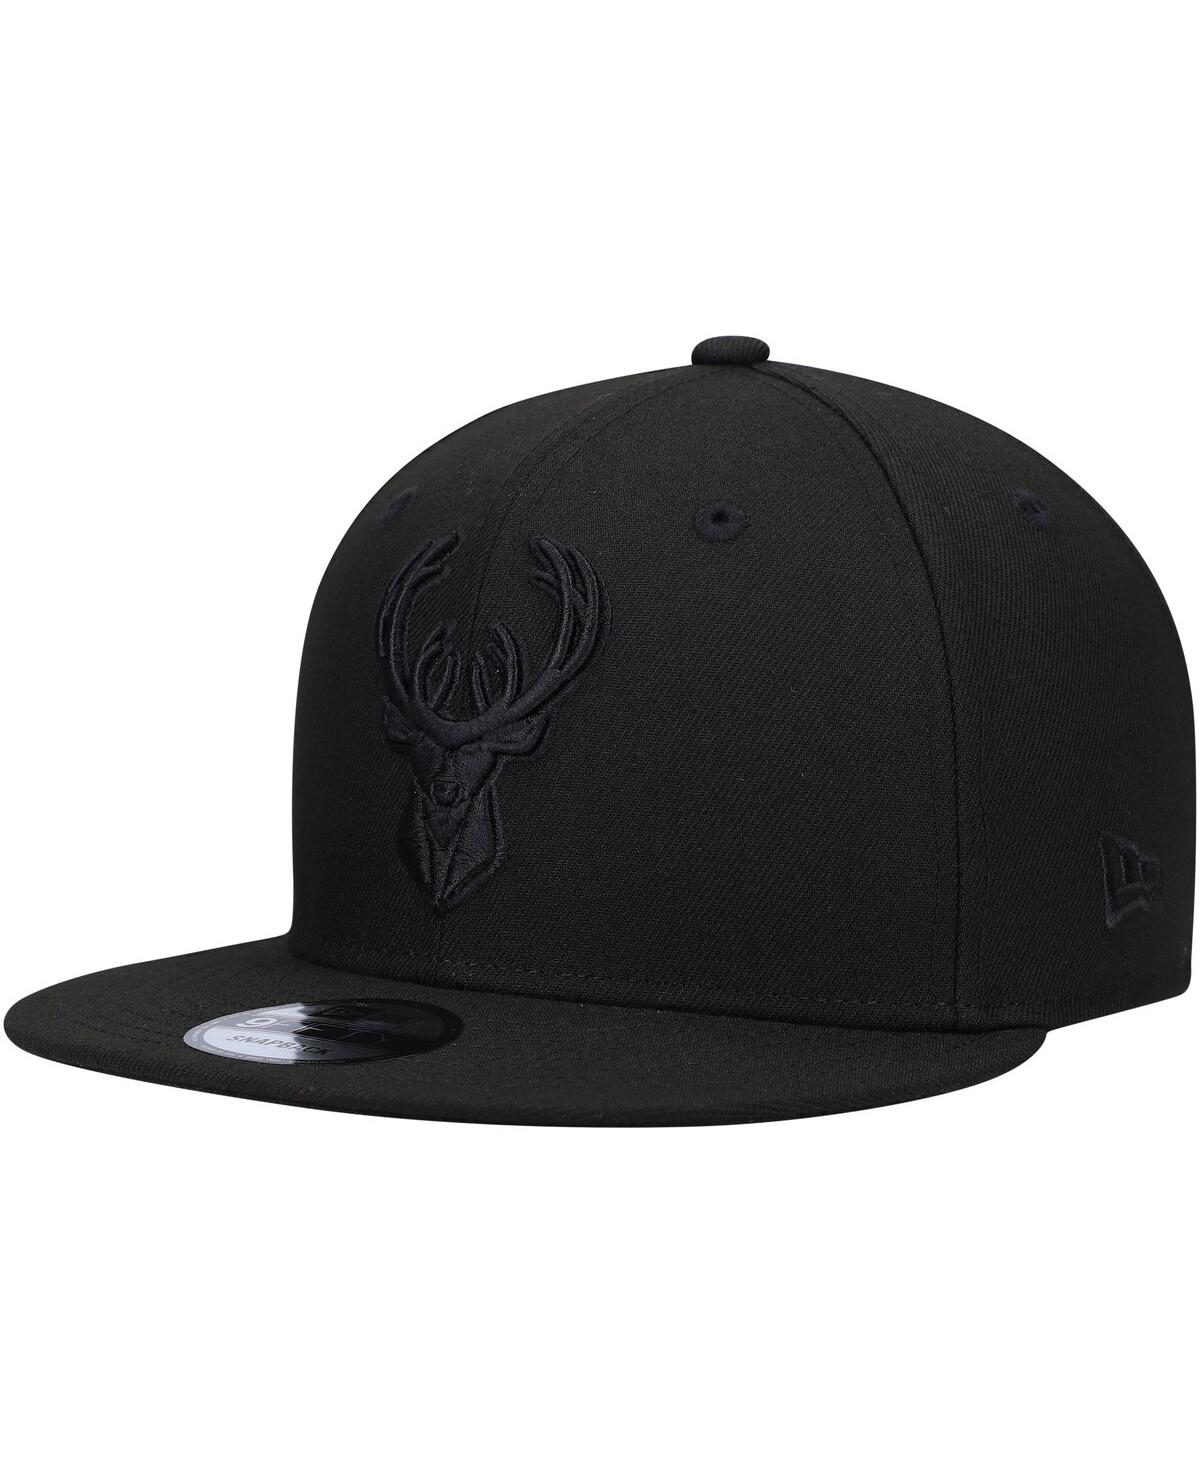 New Era Men's  Milwaukee Bucks Black On Black 9fifty Snapback Hat